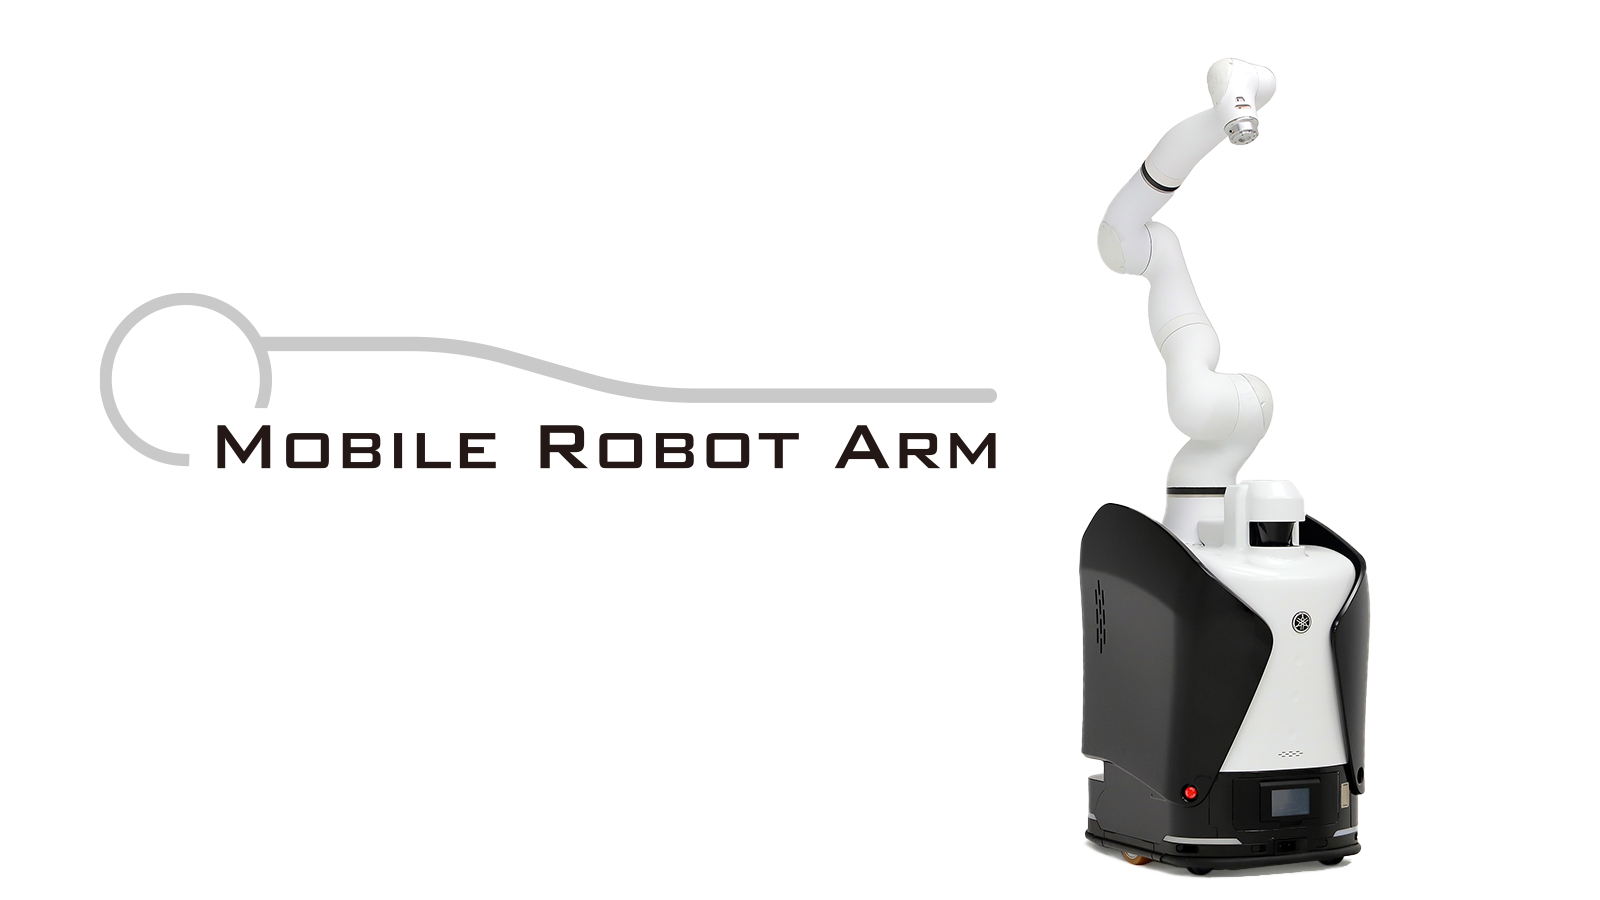 Mobile Robot Arm